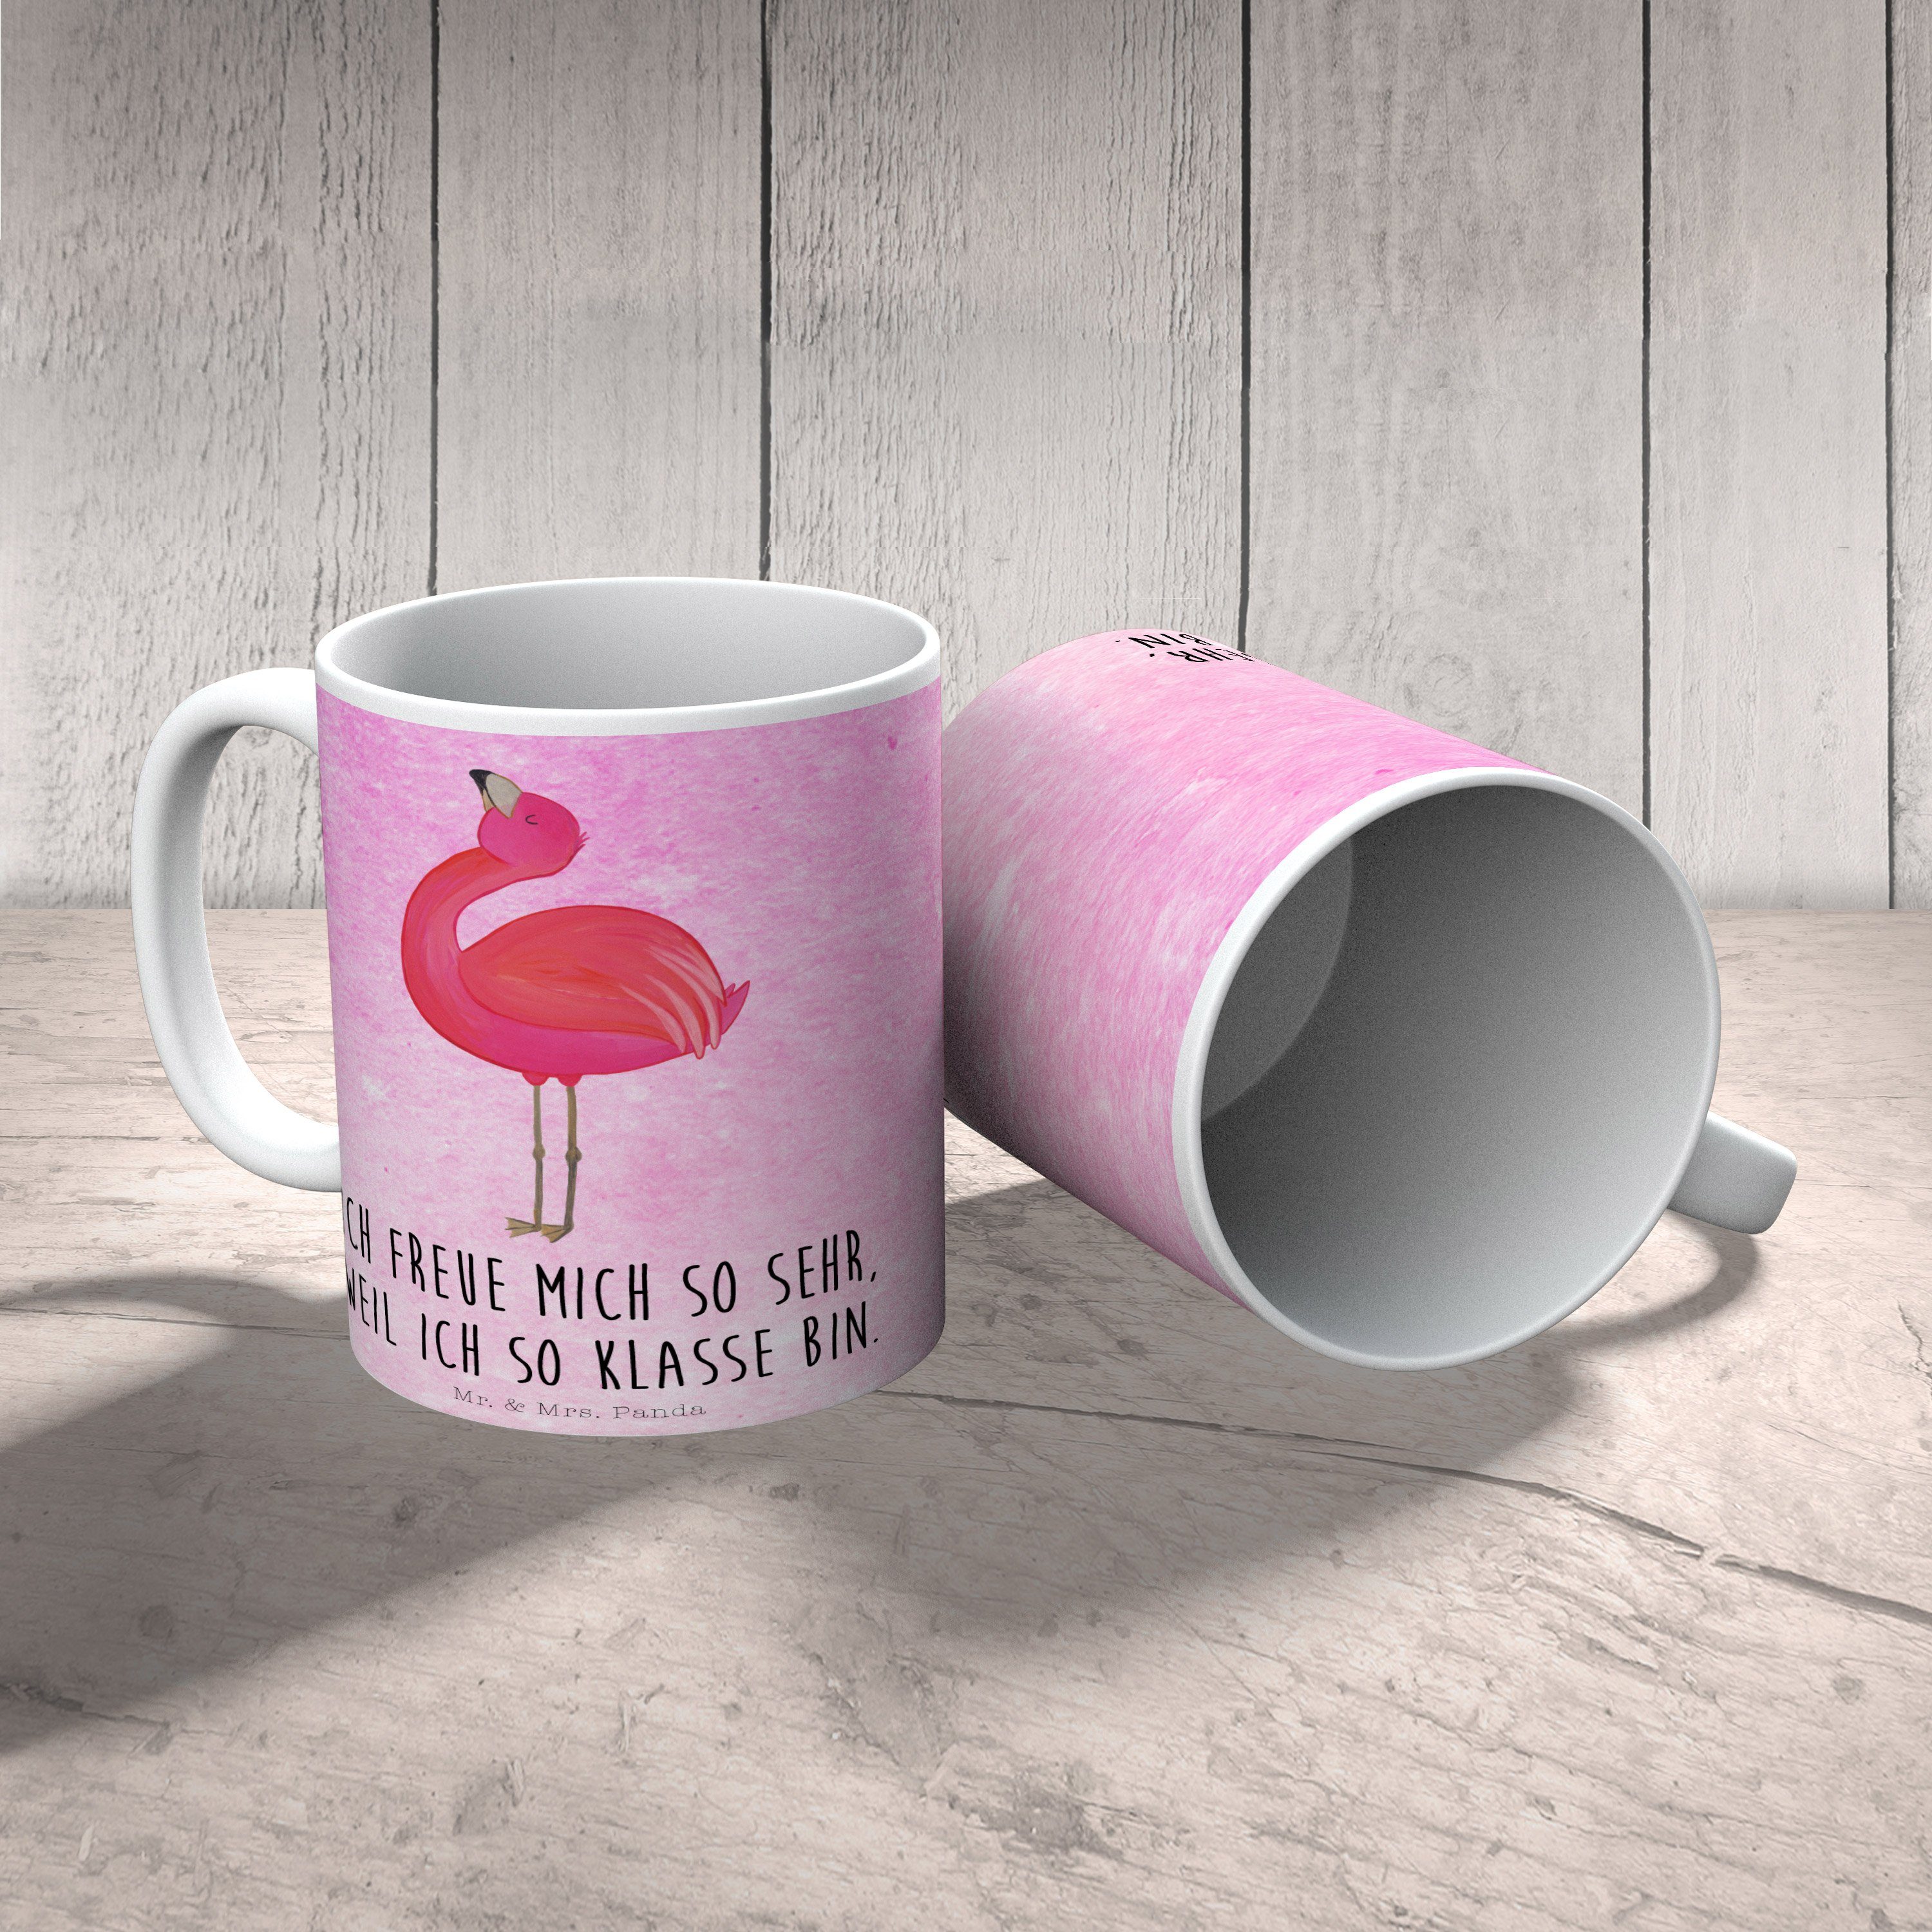 Mr. & Mrs. Aquarell Tasse, Panda Porzel, stolz Selbstliebe, Geschenk, Tasse - Flamingo - Pink Keramik